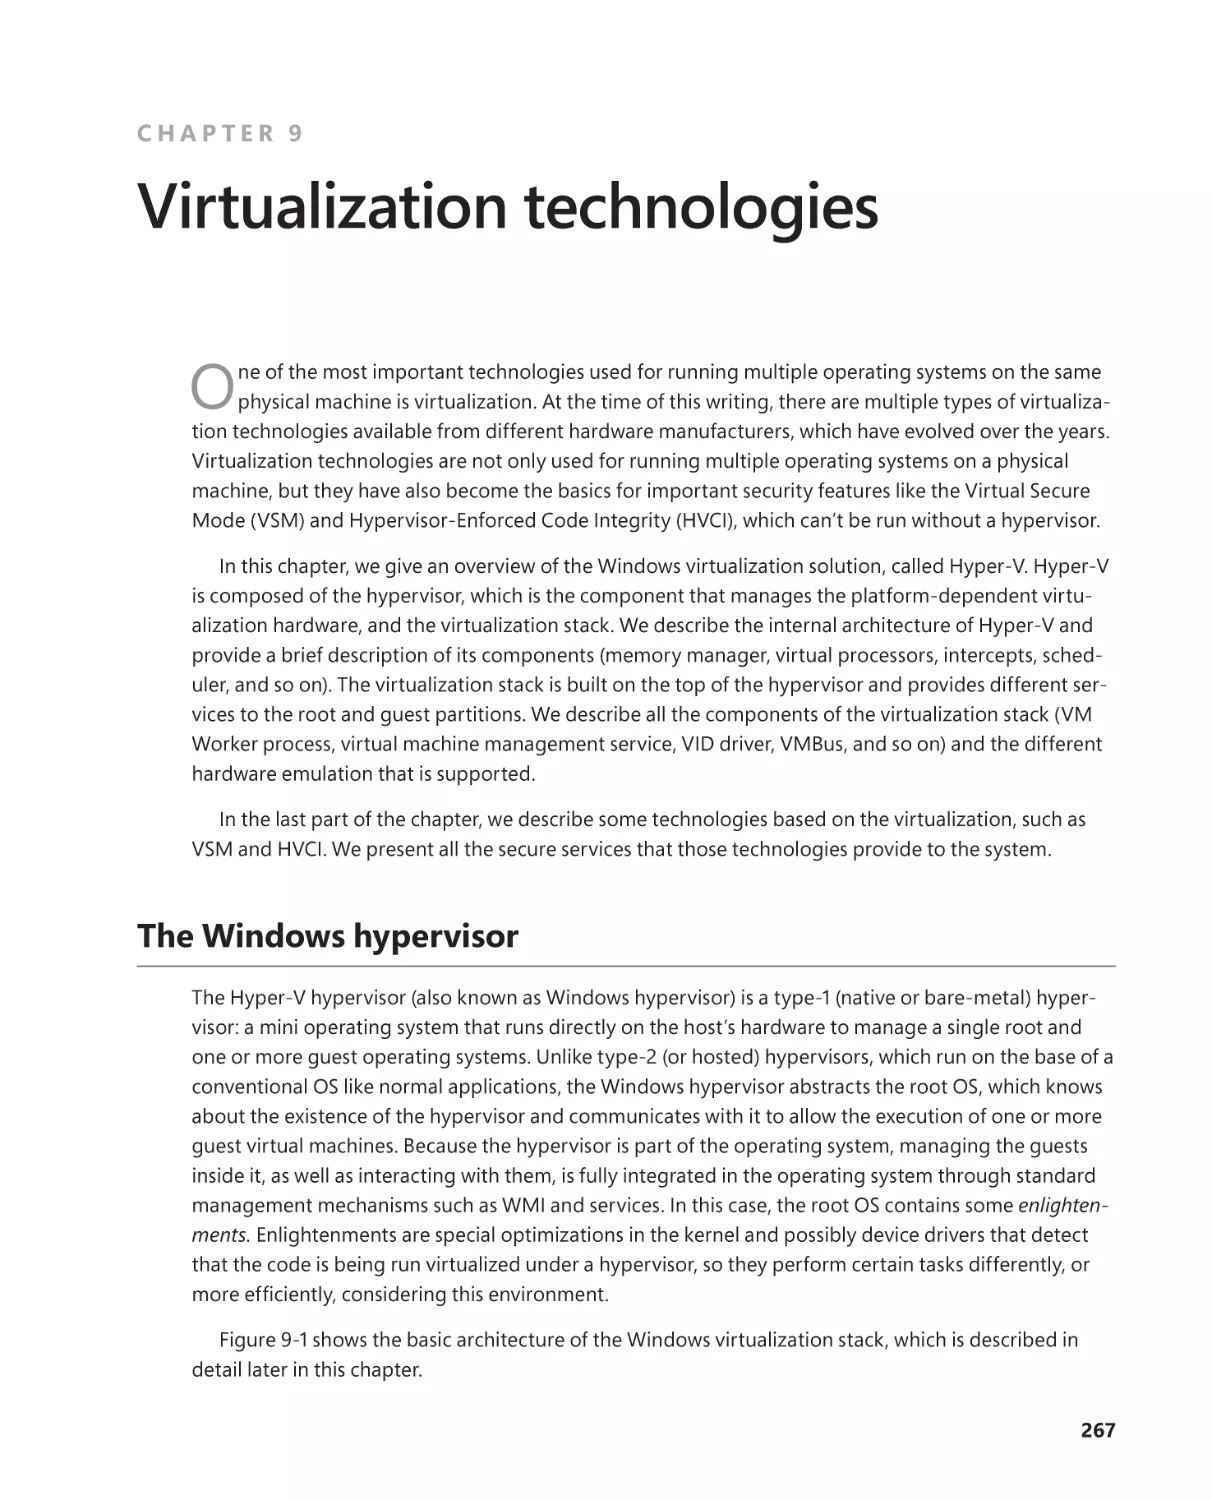 Chapter 9 Virtualization technologies
The Windows hypervisor